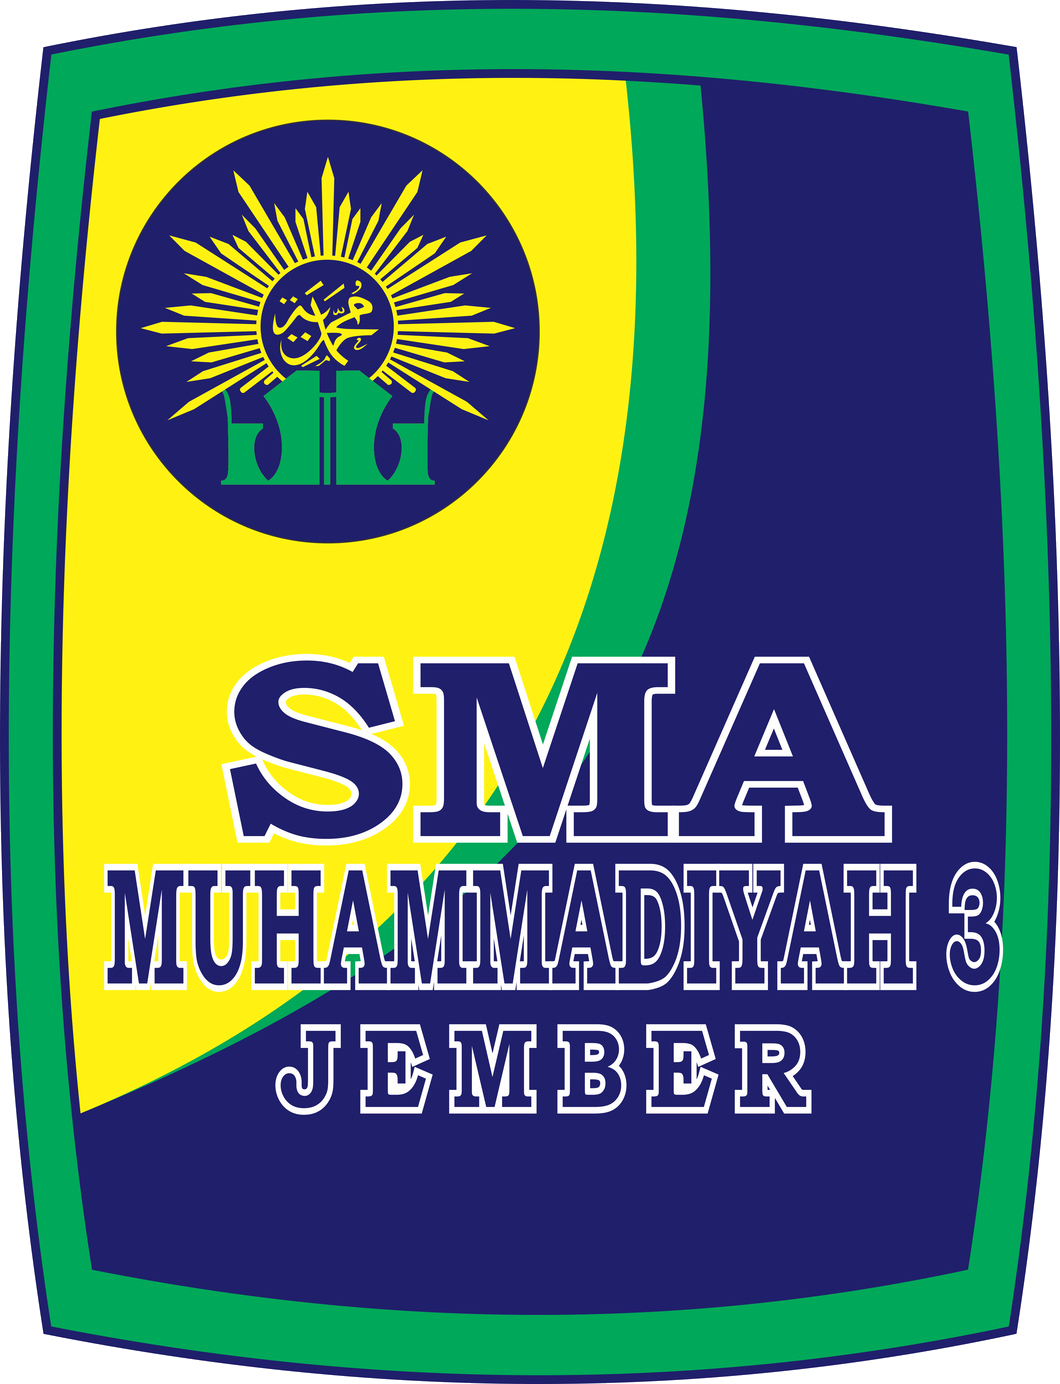 SMA MUHAMMADIYAH 3 JEMBER